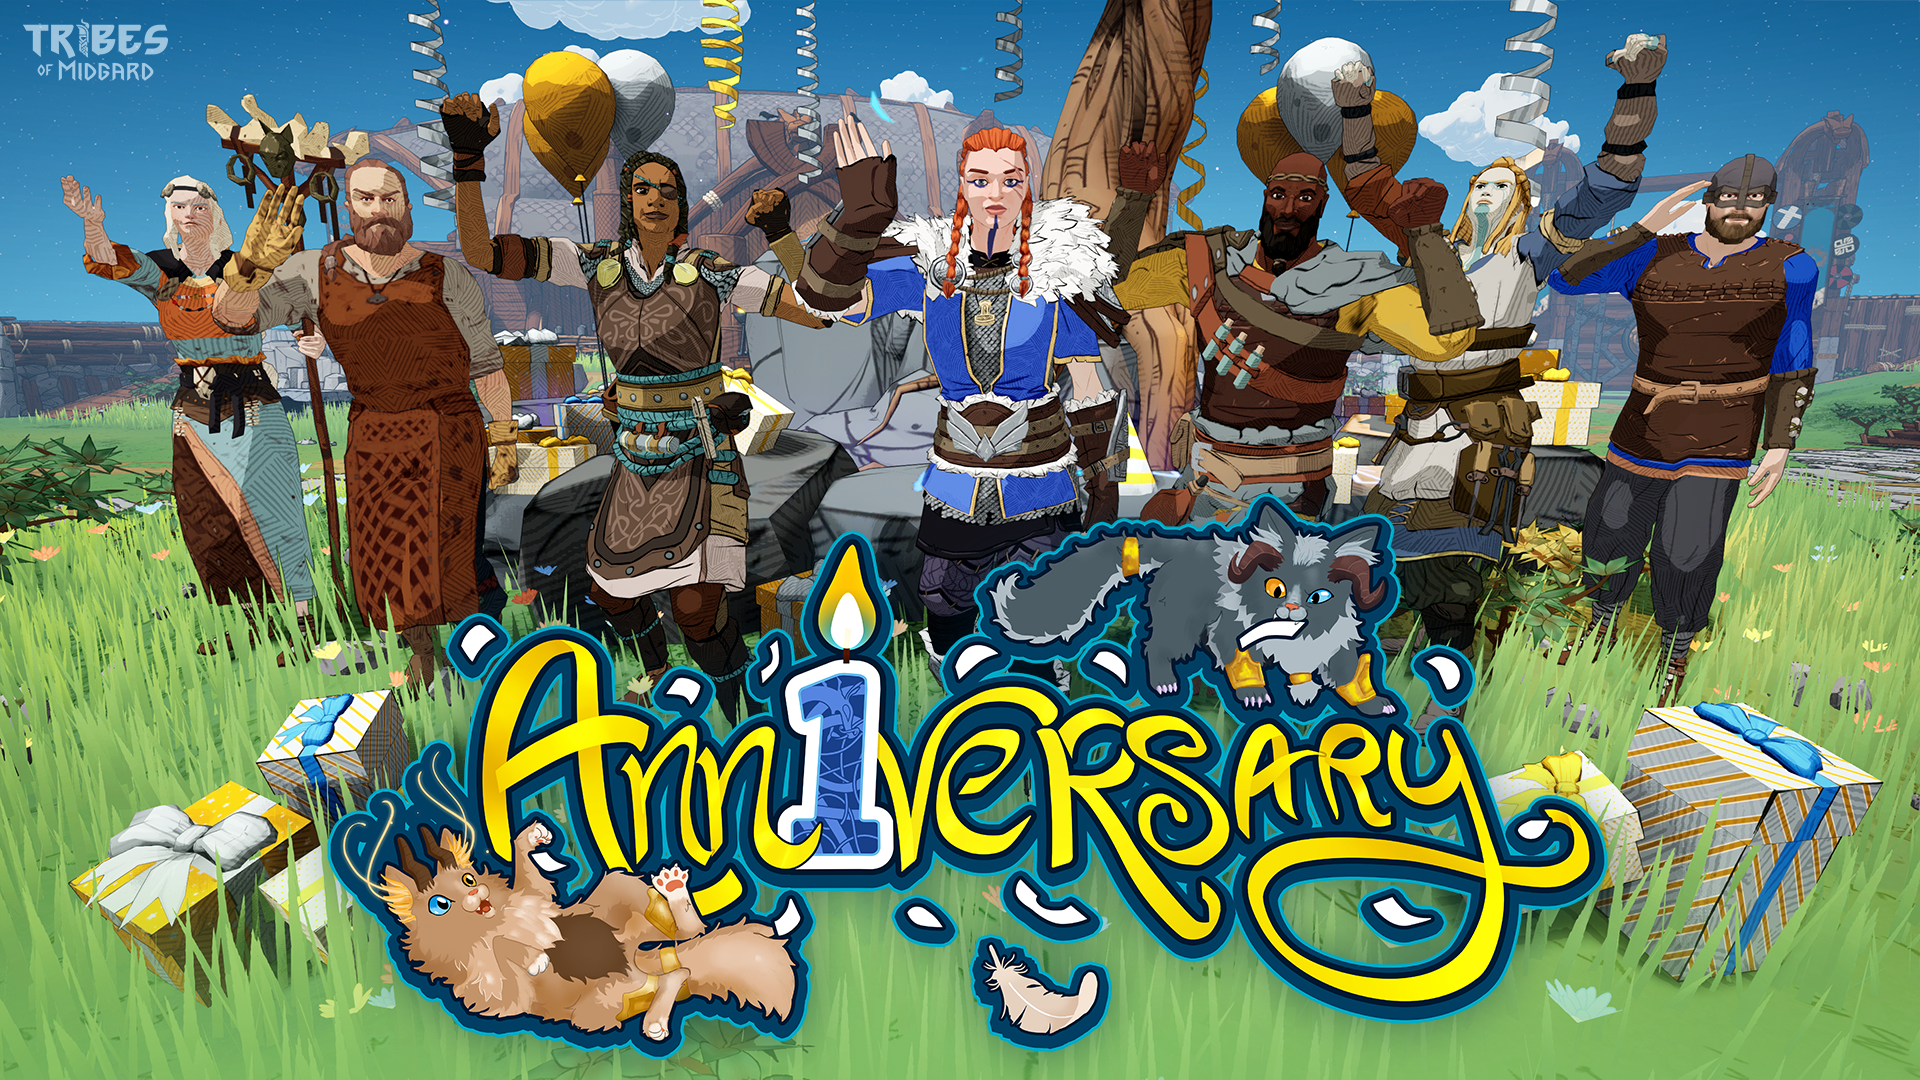 Celebrating One Year of Tribes of Midgard! – Dev Blog #3